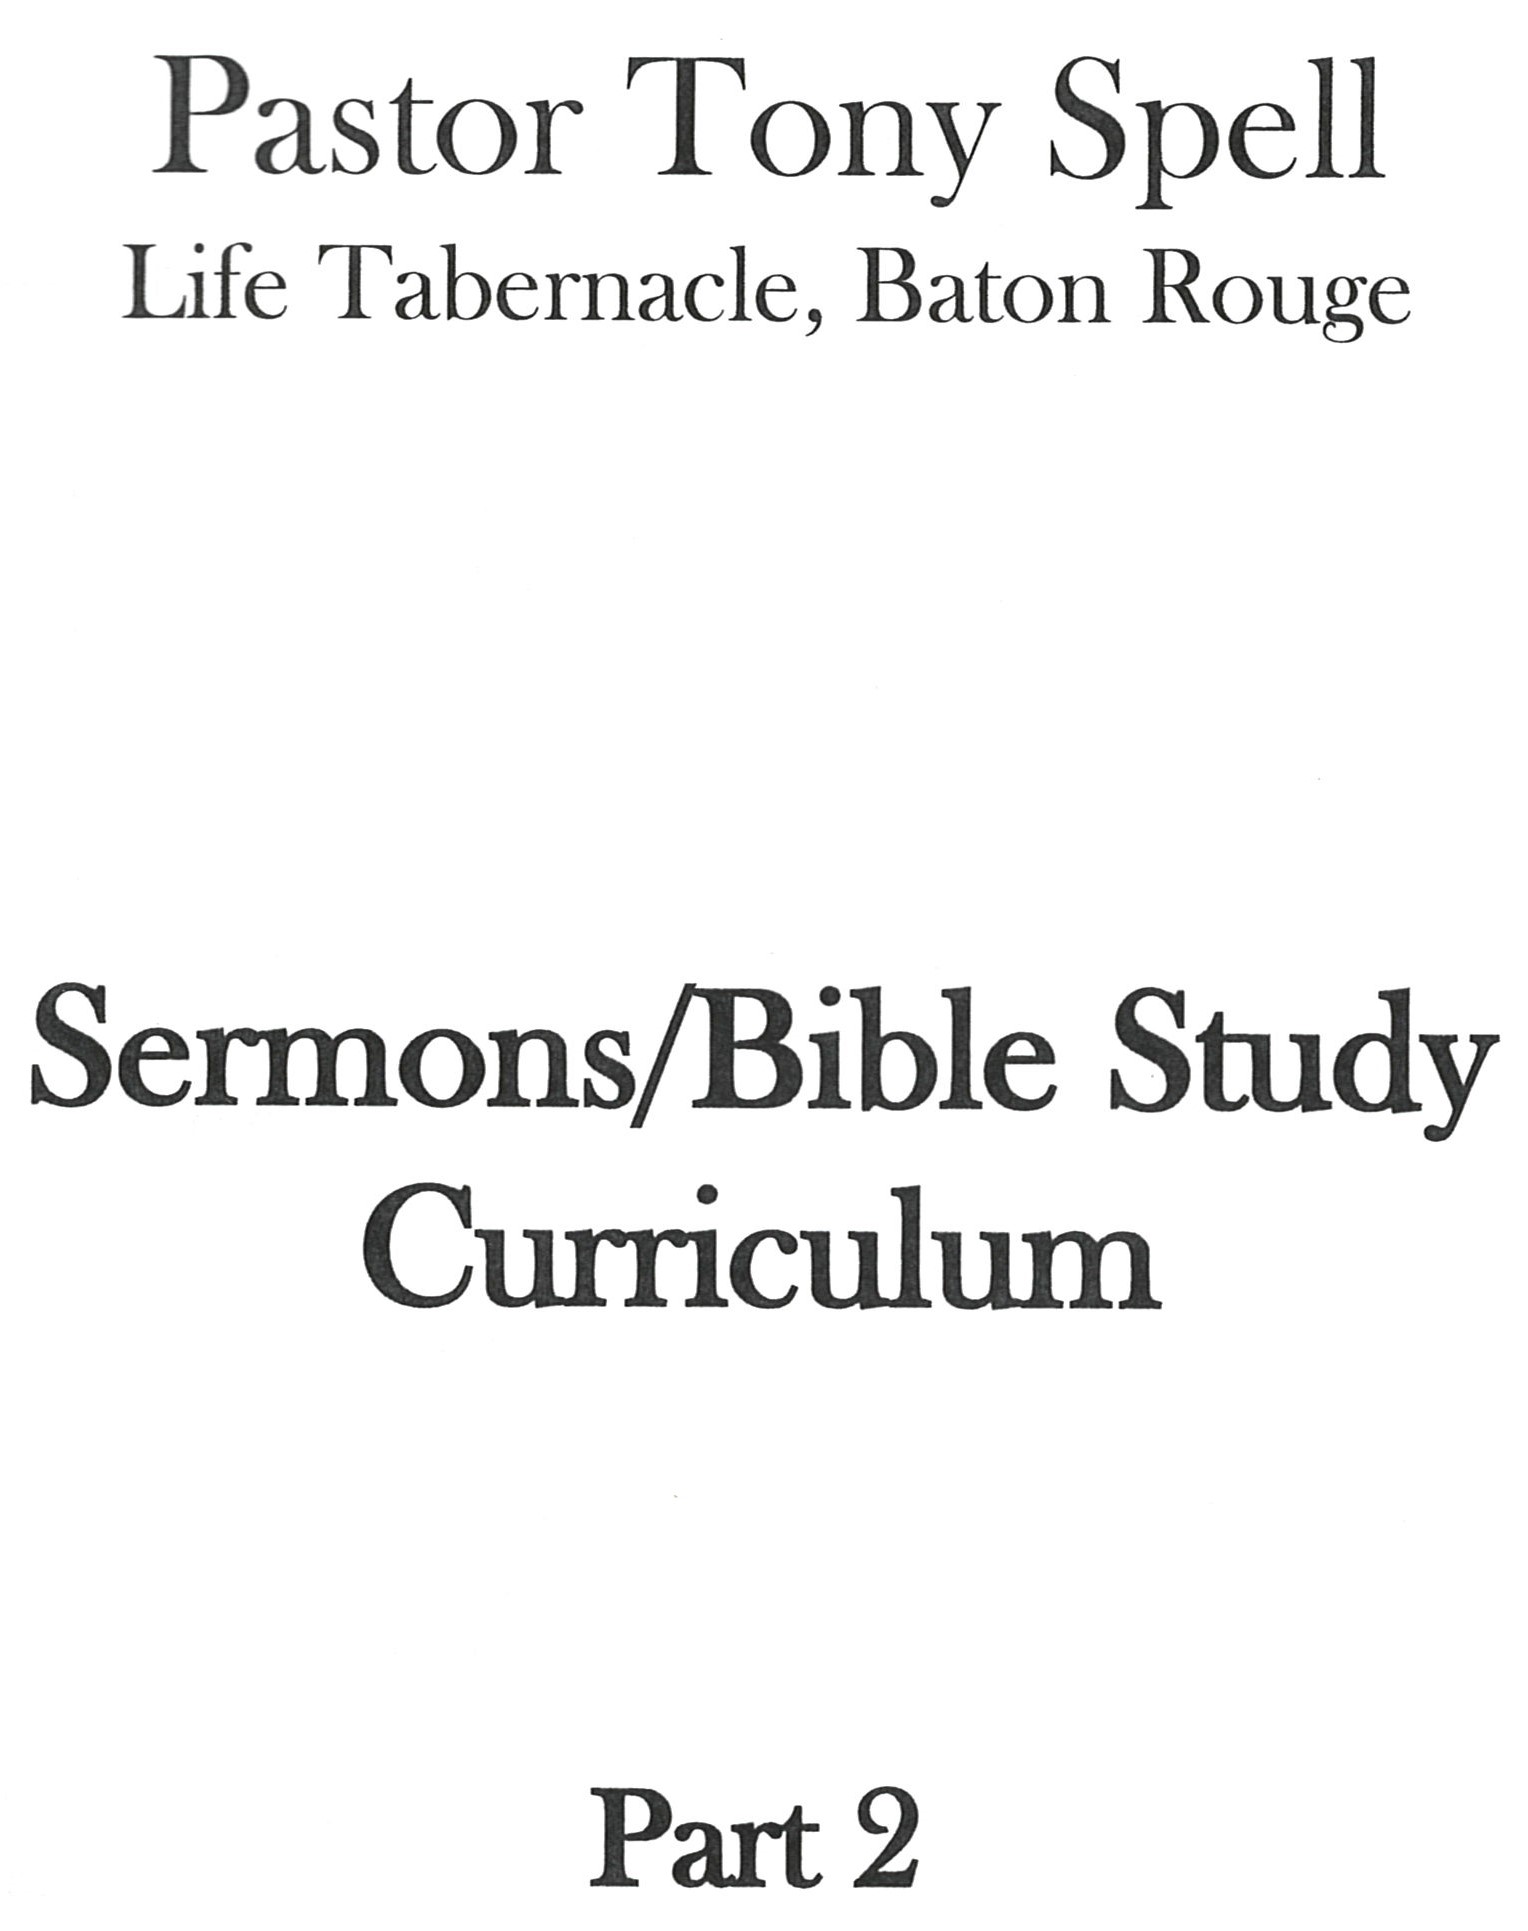 Sermons/Bible Study Curriculum (Part 2) - Tony Spell